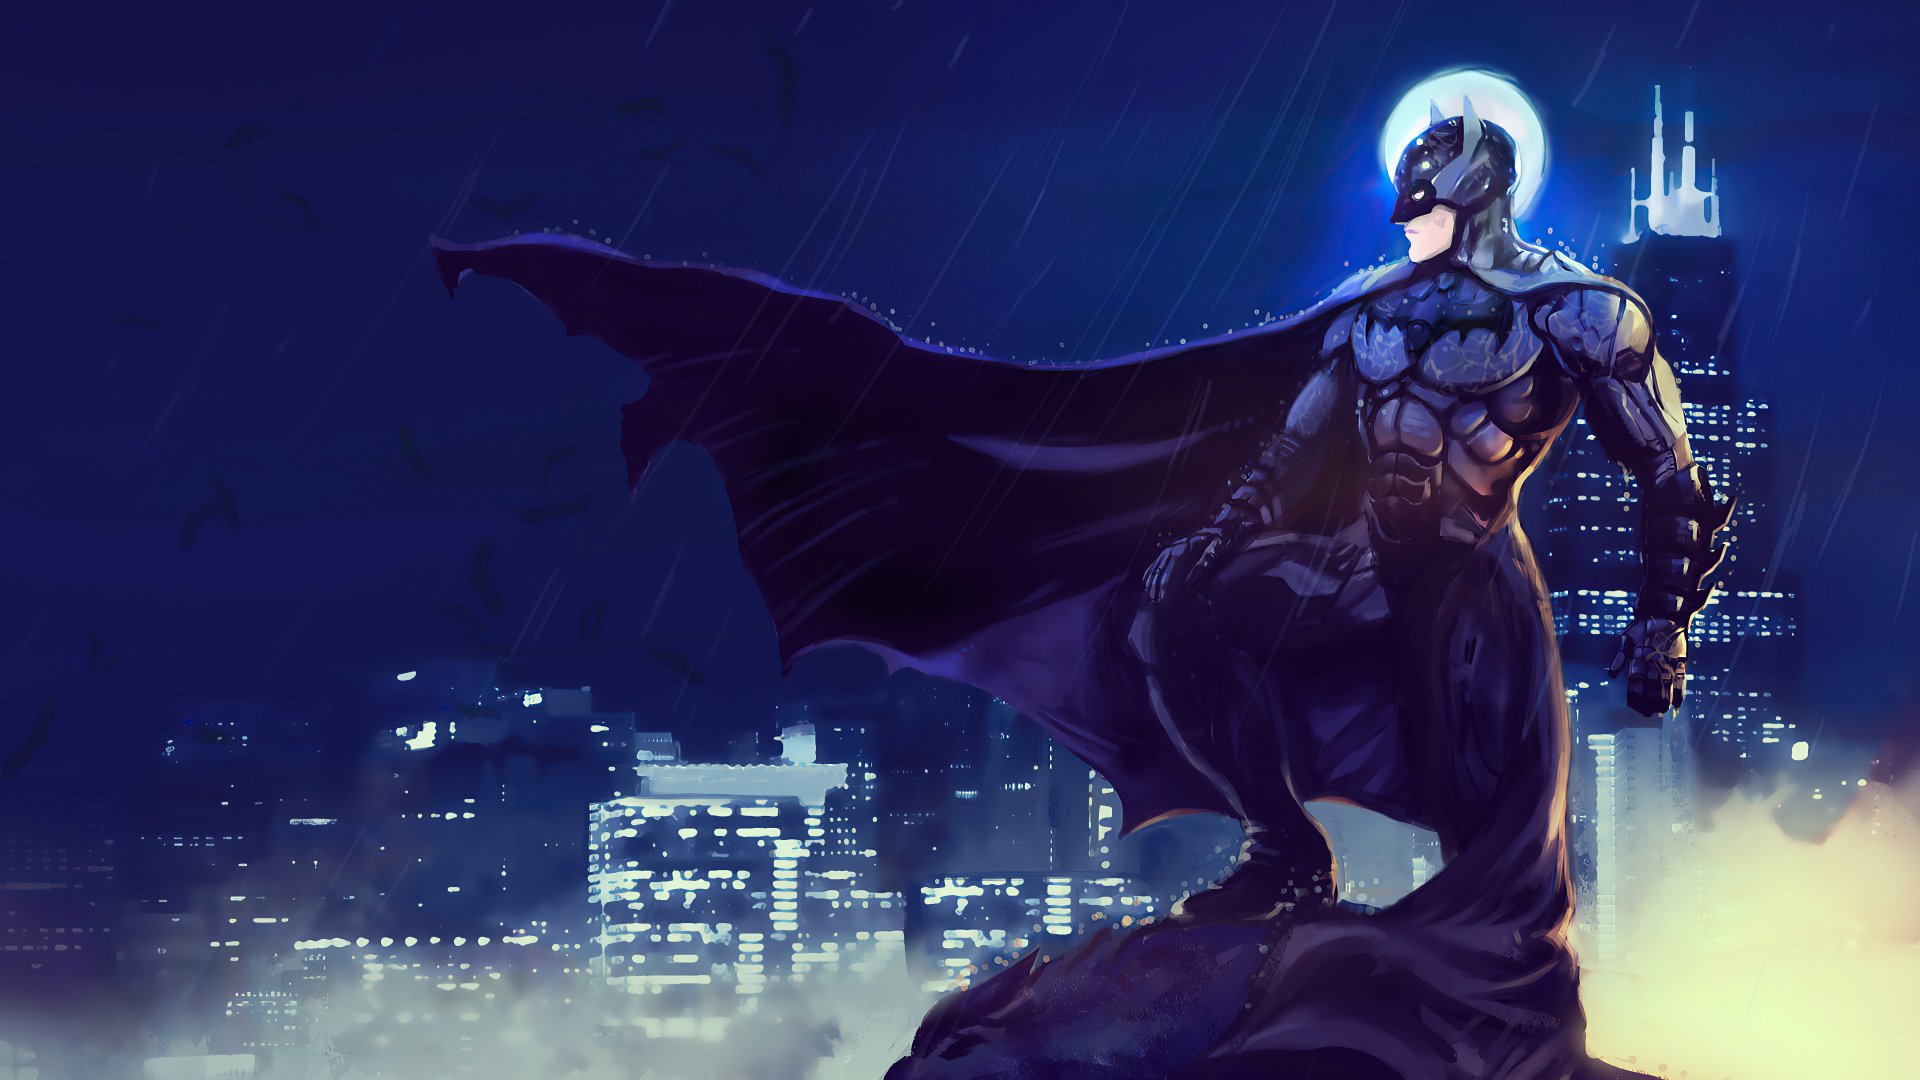 Download DC Comics Comic Batman  4k Ultra HD Wallpaper by emusheret6